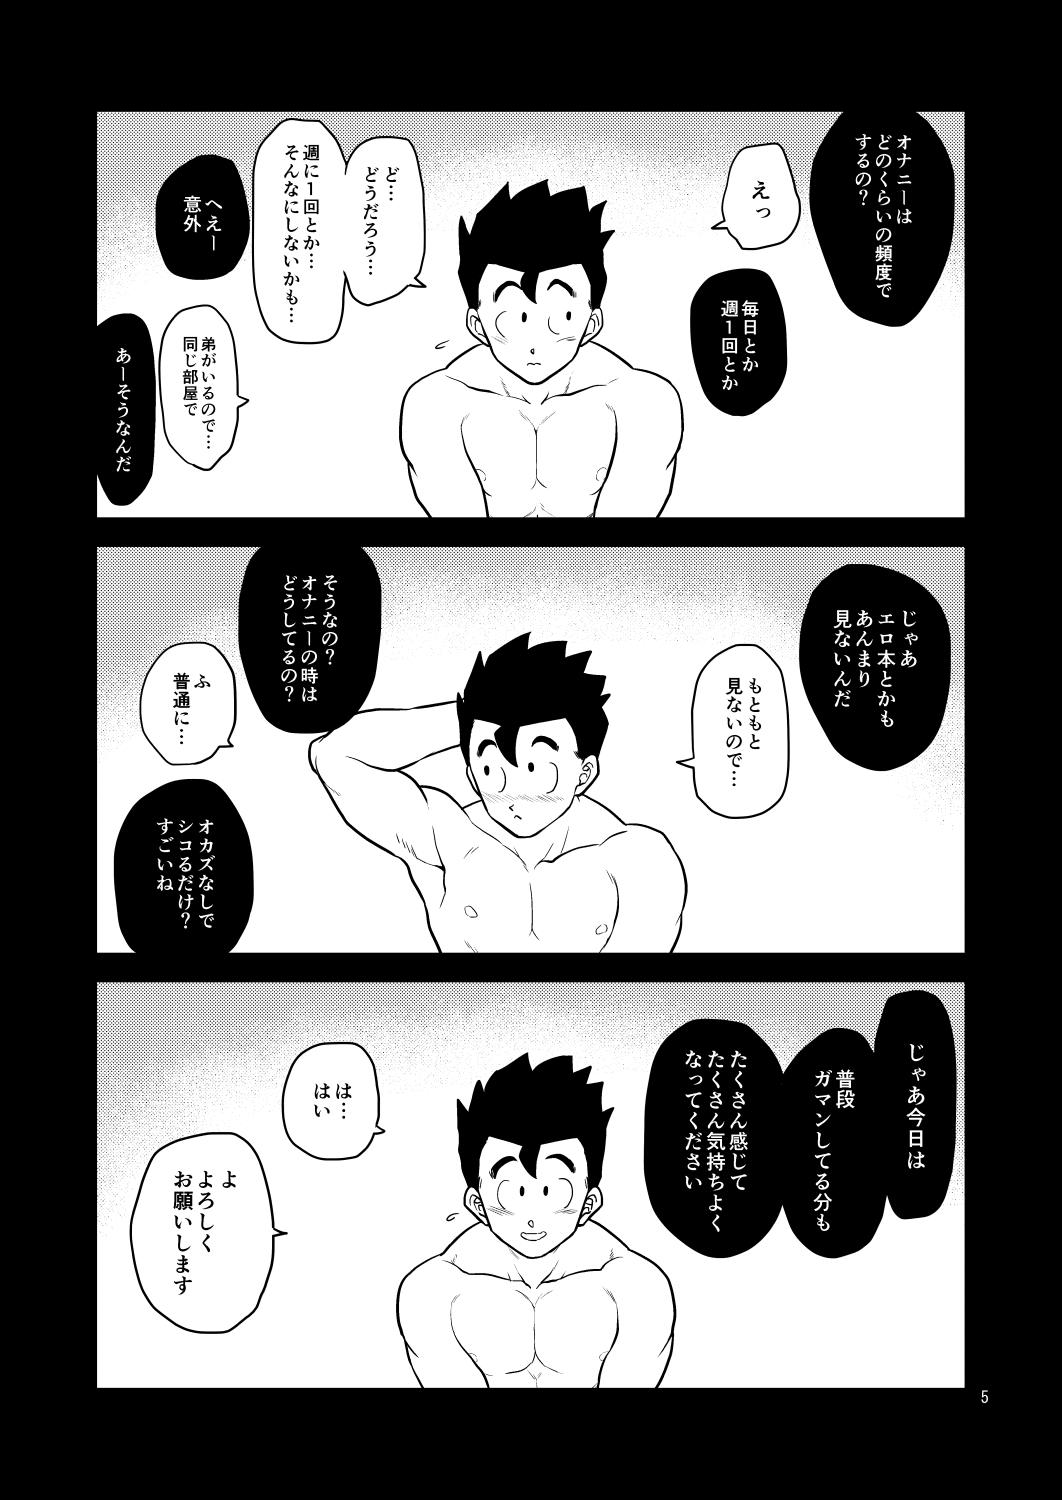 Transvestite Honjitsu wa Nama Biyori - Dragon ball z Wild - Page 4